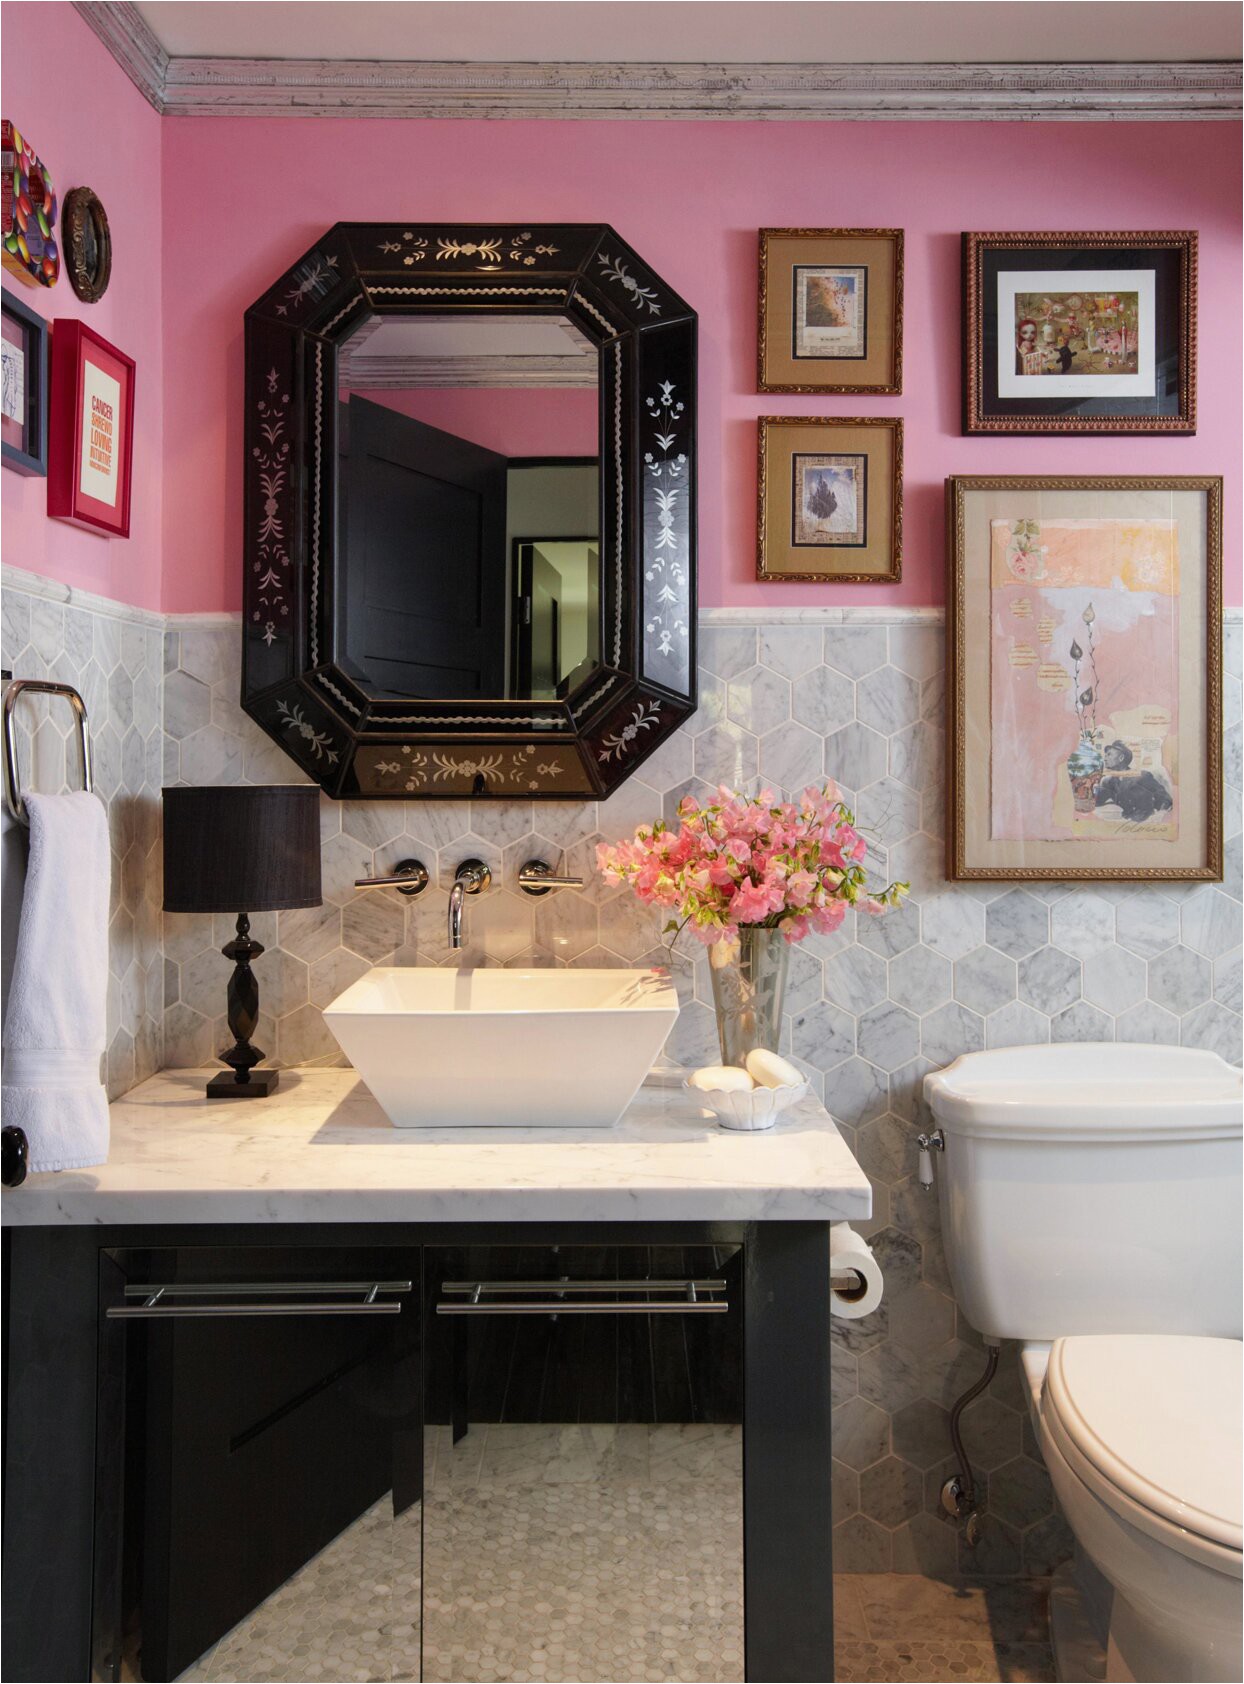 Light Brown Bathroom Rugs Stylish Bathroom Color Schemes